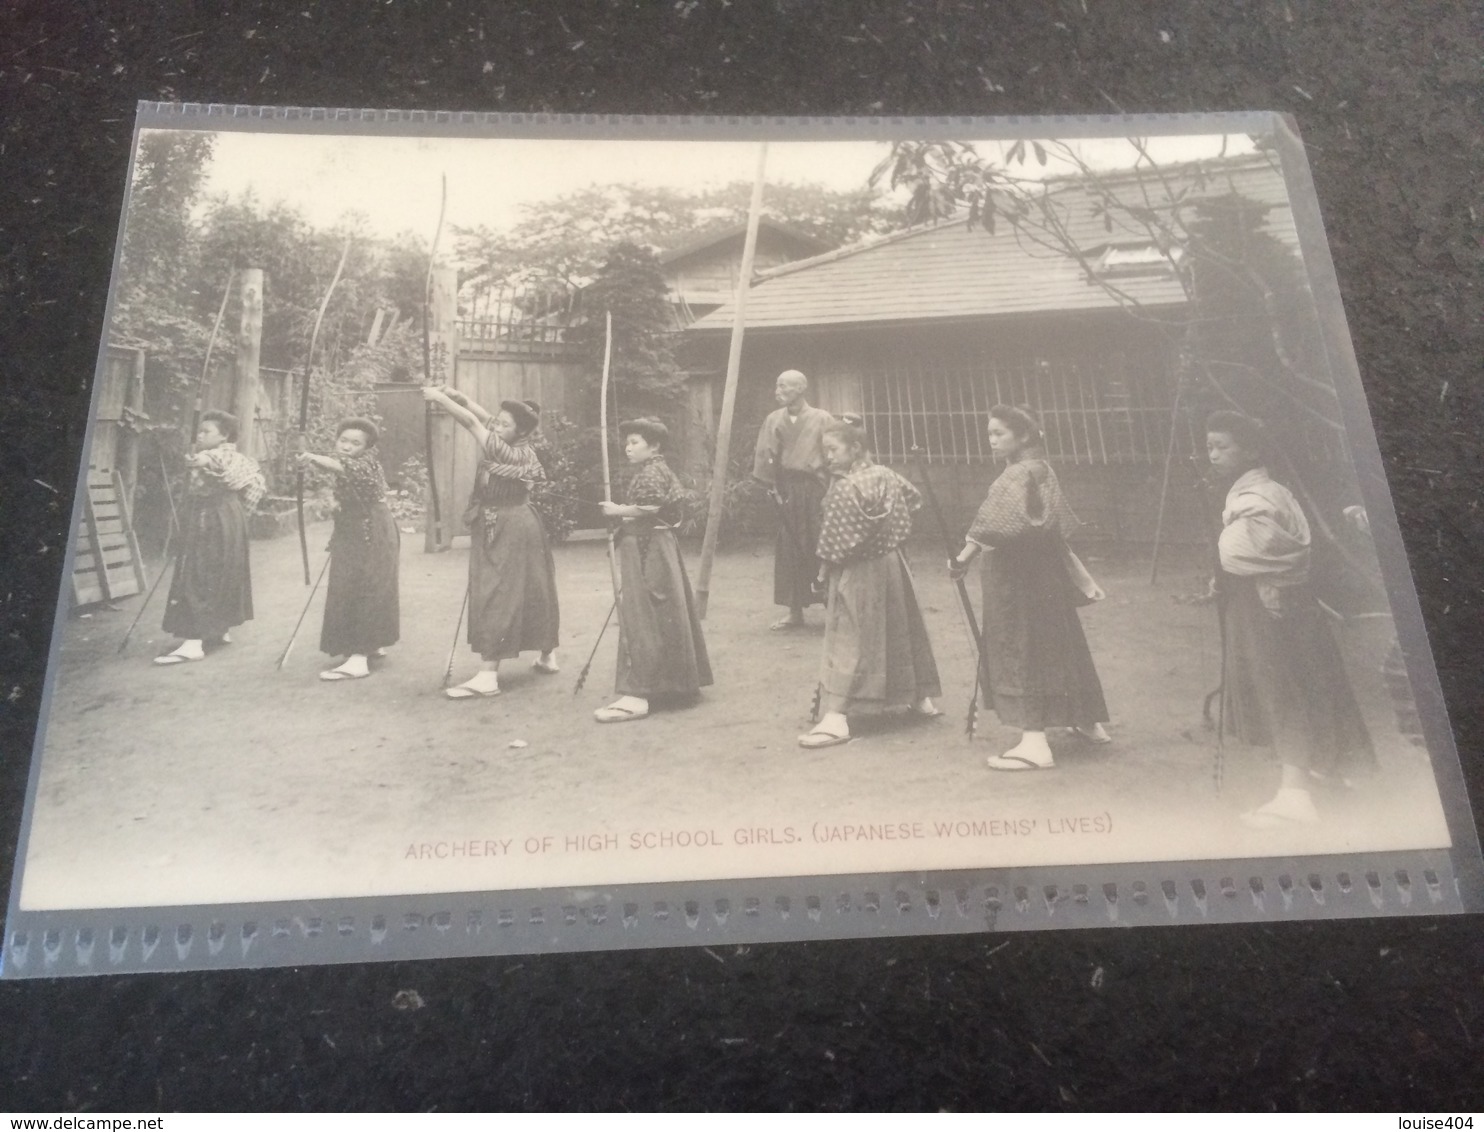 BR -1800 - ARCHERY OF HIGH SCHOOL GIRLS -JAPANES WOMEN' LIVES - Tir à L'Arc